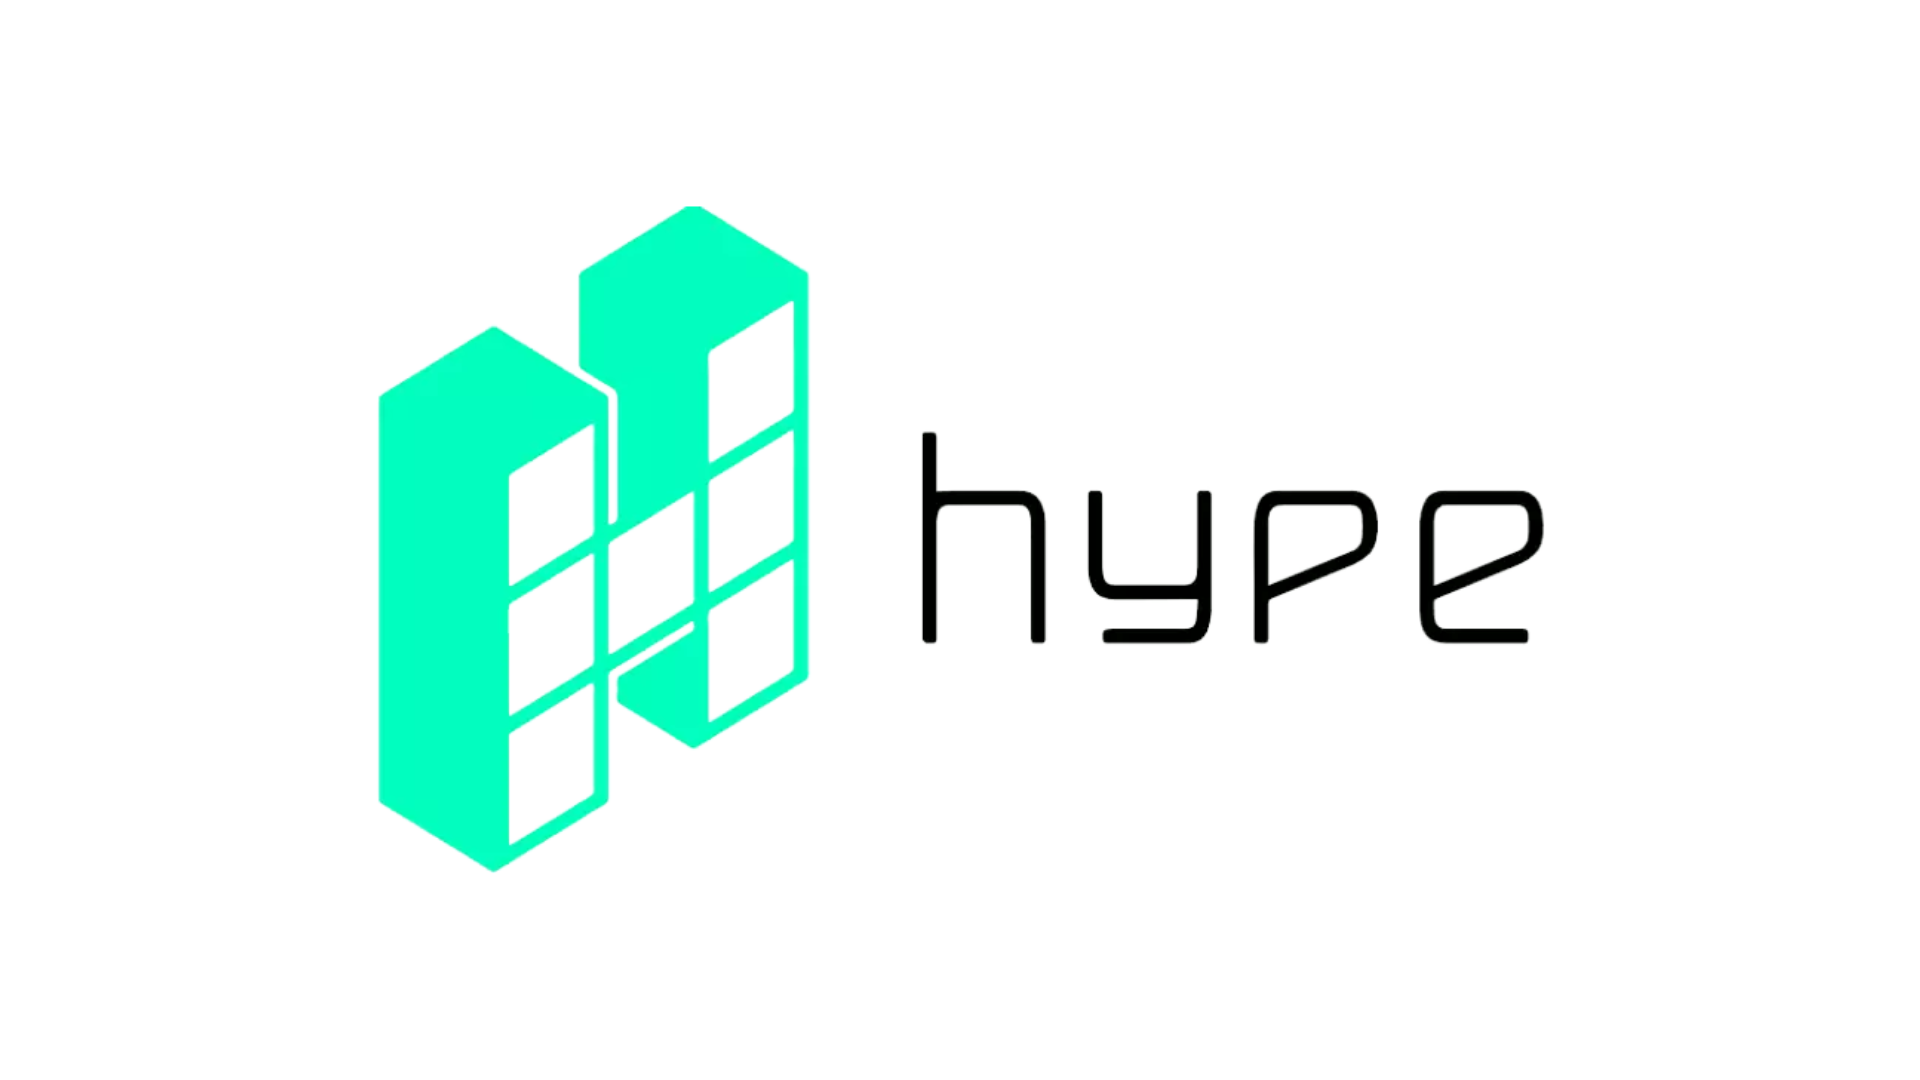 Hype Games